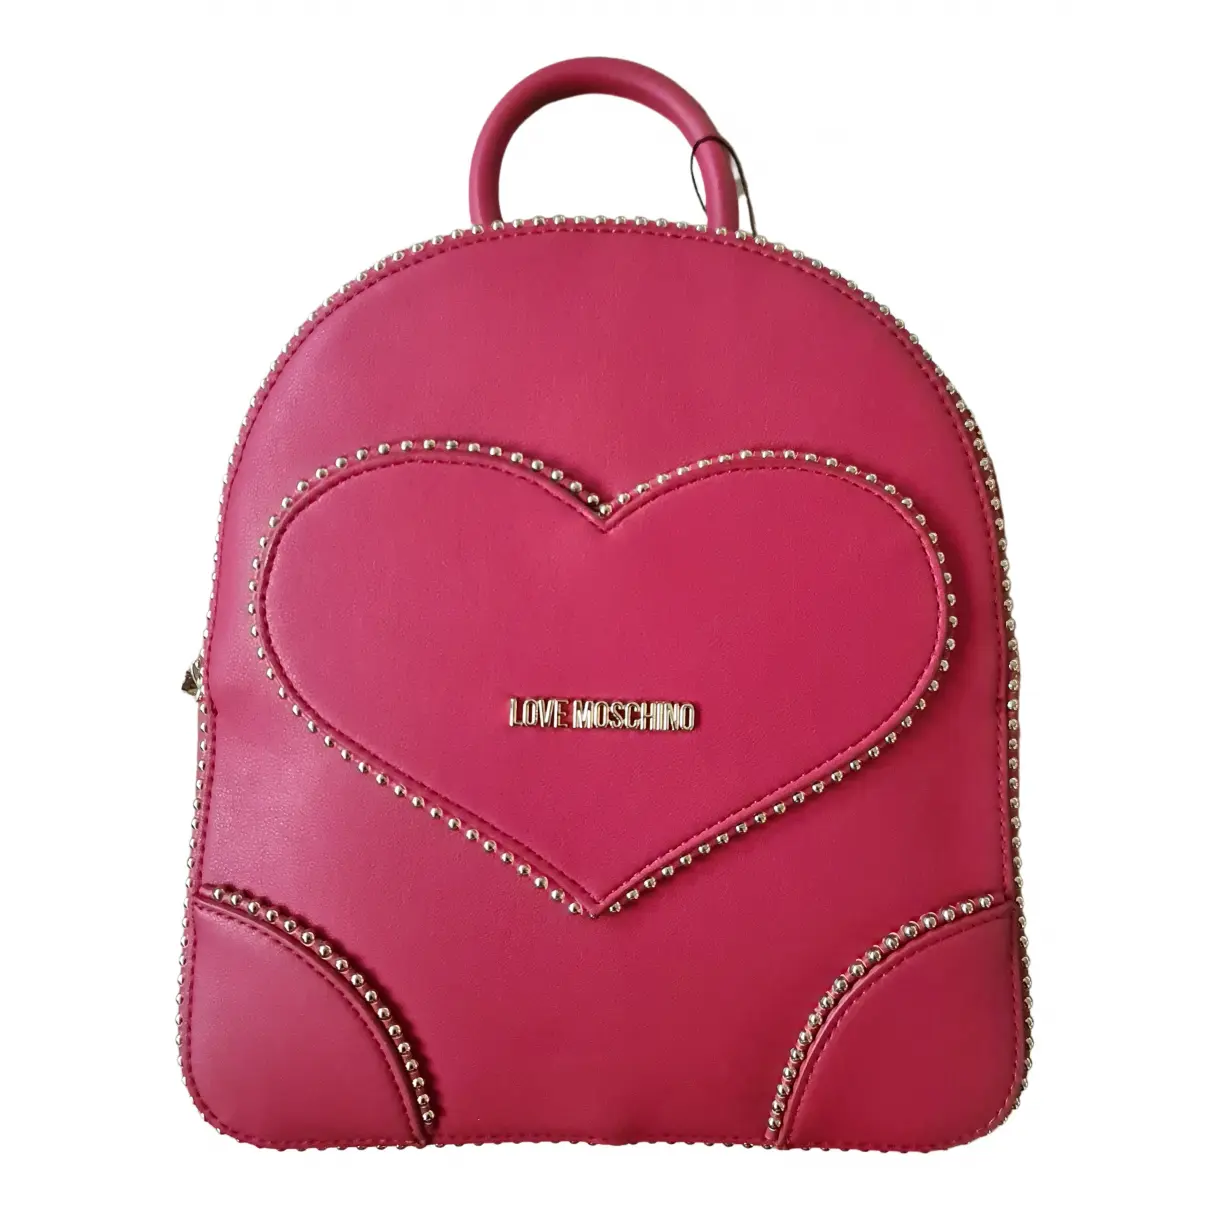 Backpack Moschino Love